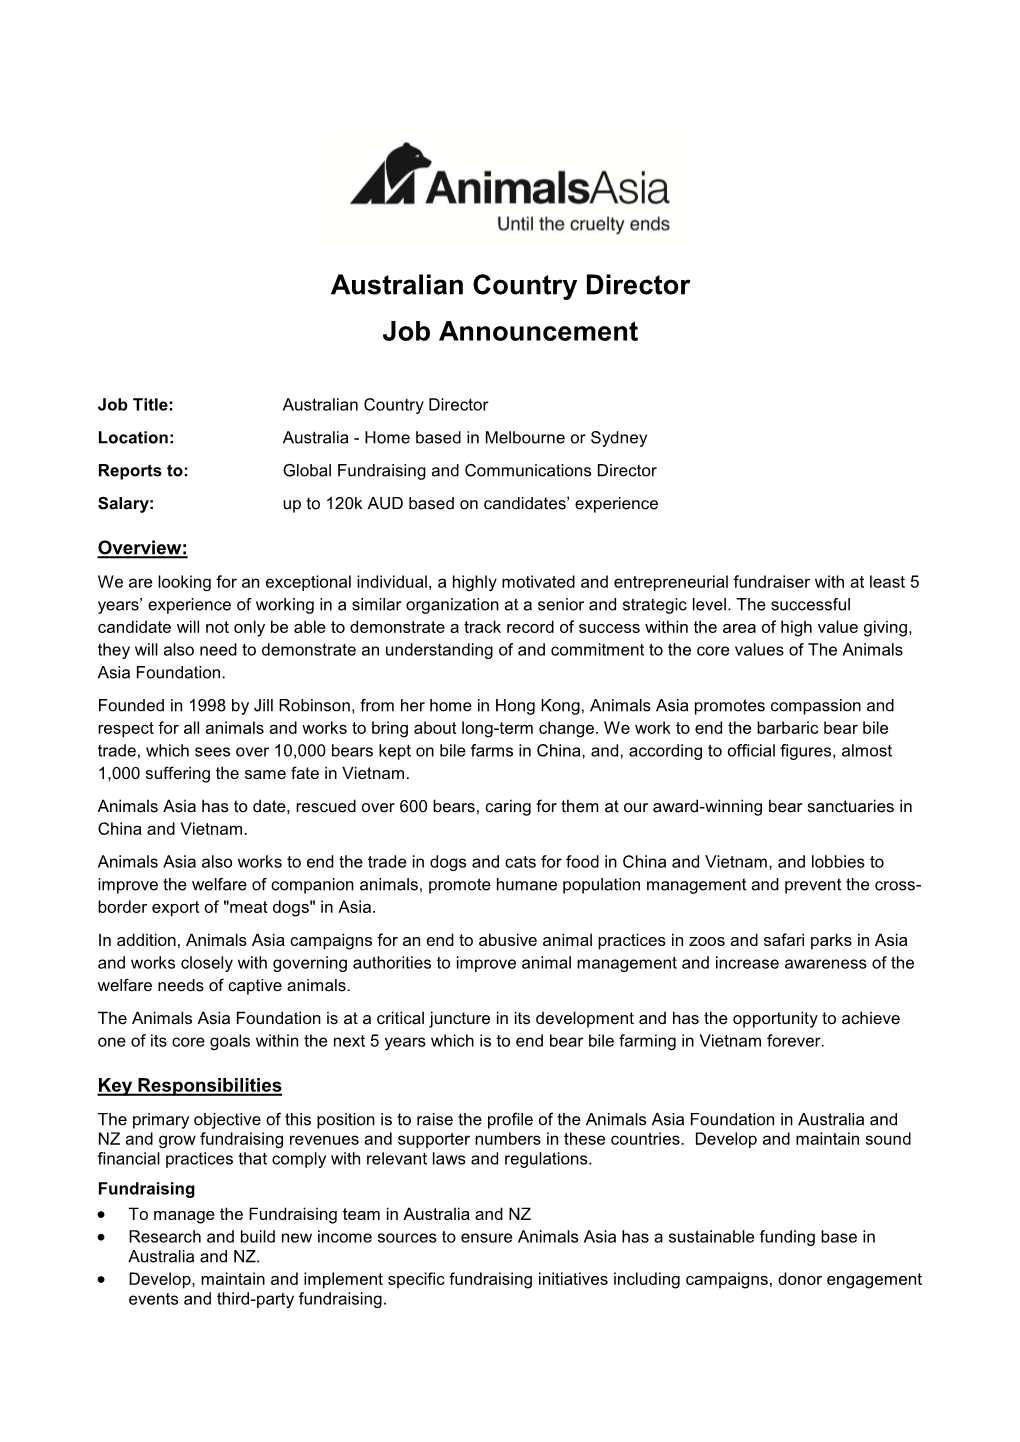 Australian Country Director Job Announcement